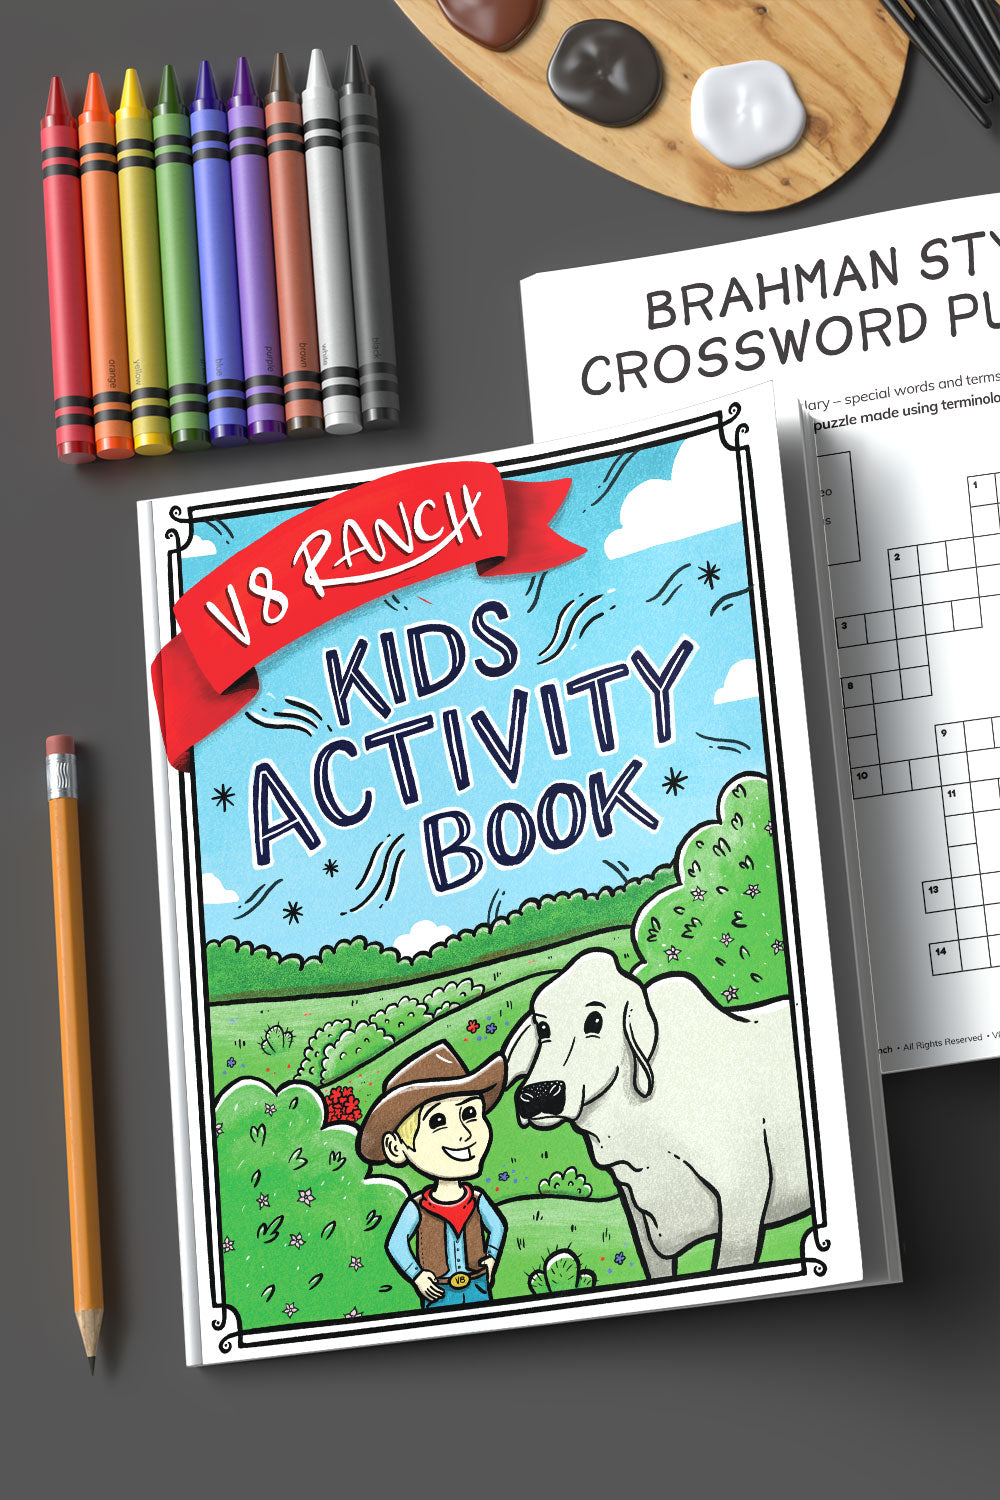 V8 Ranch Kids Activity Book